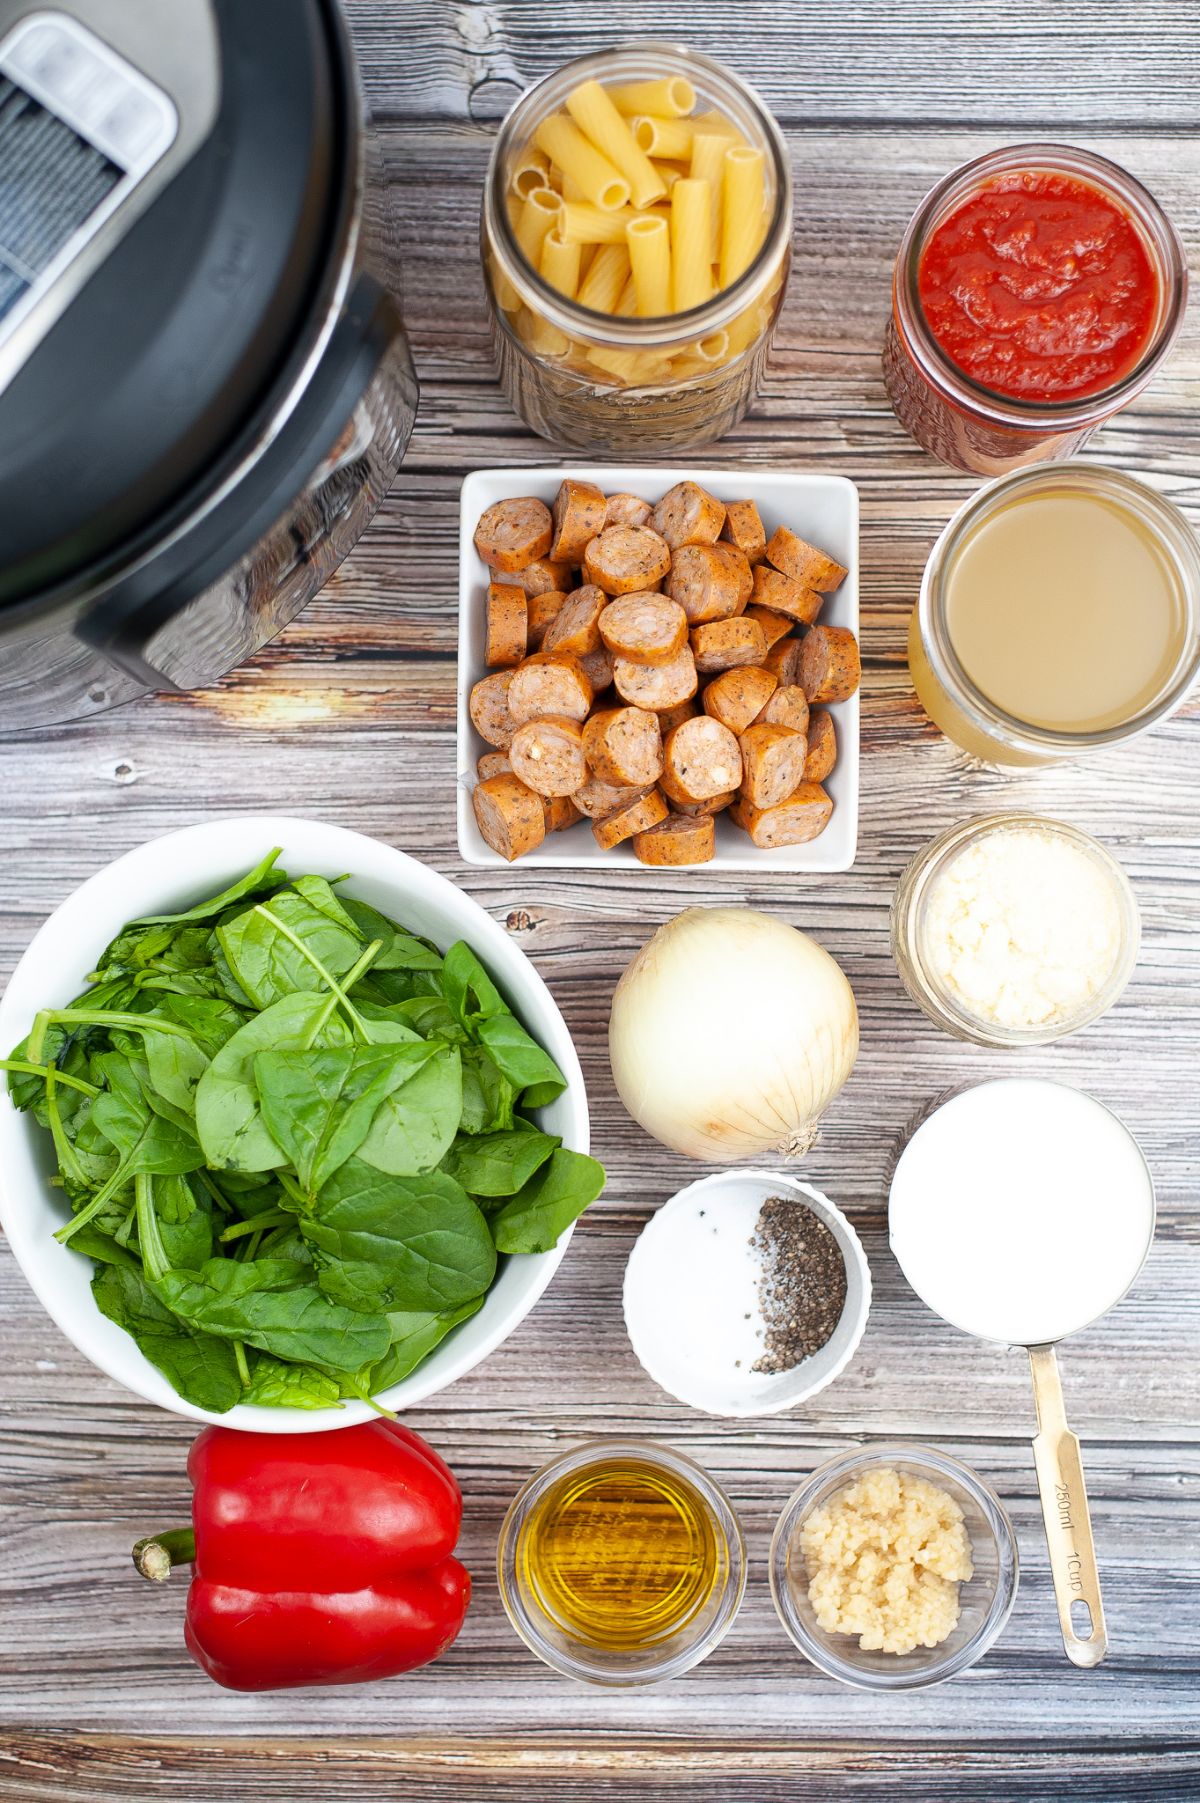 Ingredients used to make Instant Pot Italian Sausage Rigatoni.